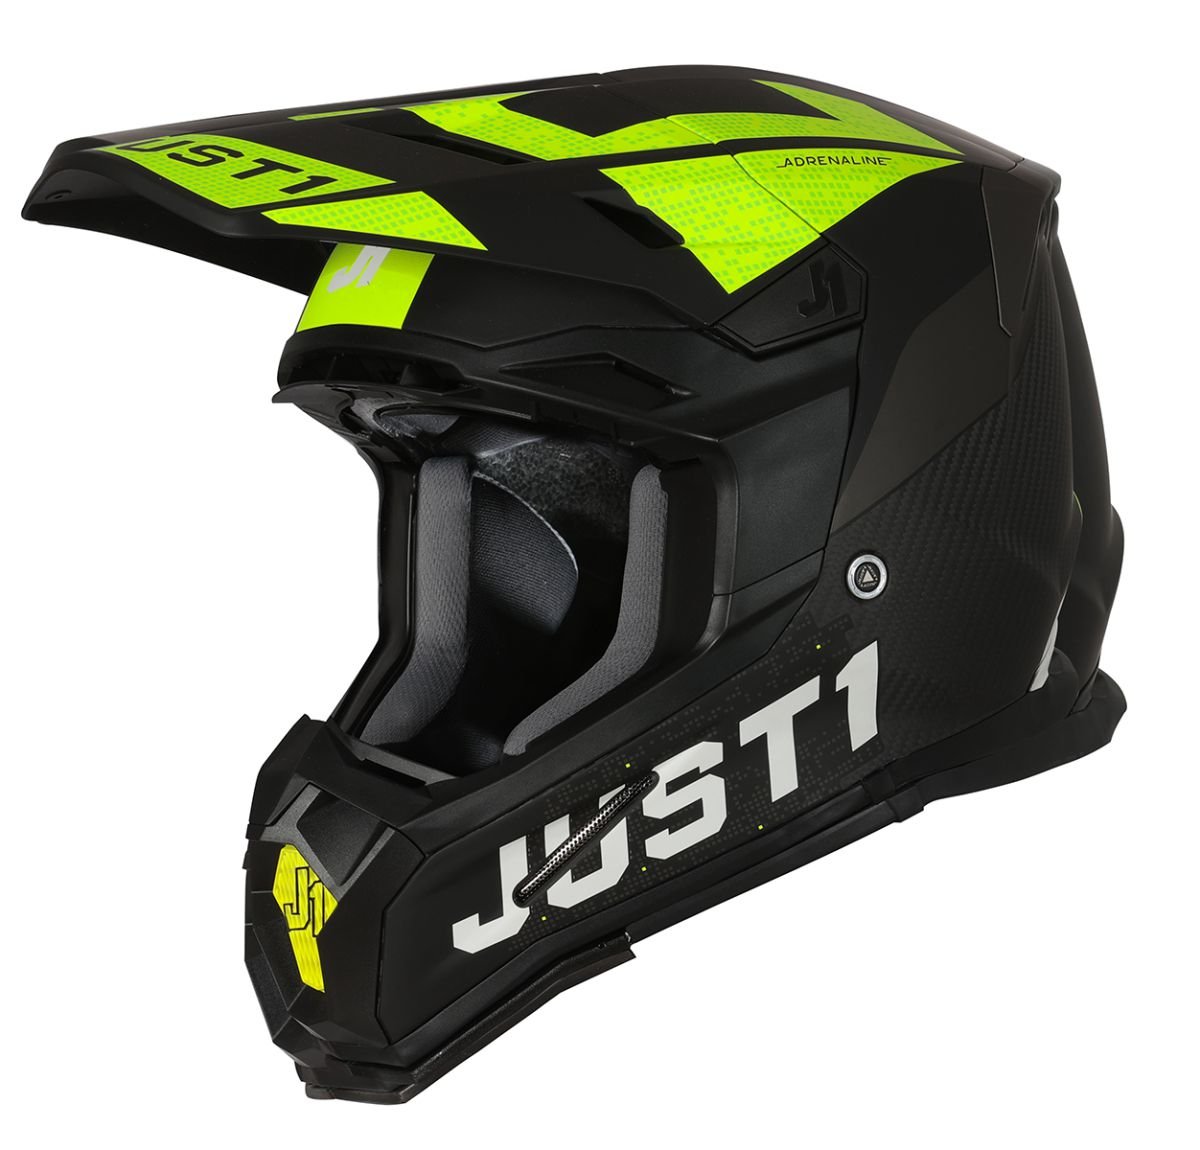 Image of EU Just1 Helmet J-22 Adrenaline Noir Jaune Fluo Carbon Mat Casque Cross Taille L